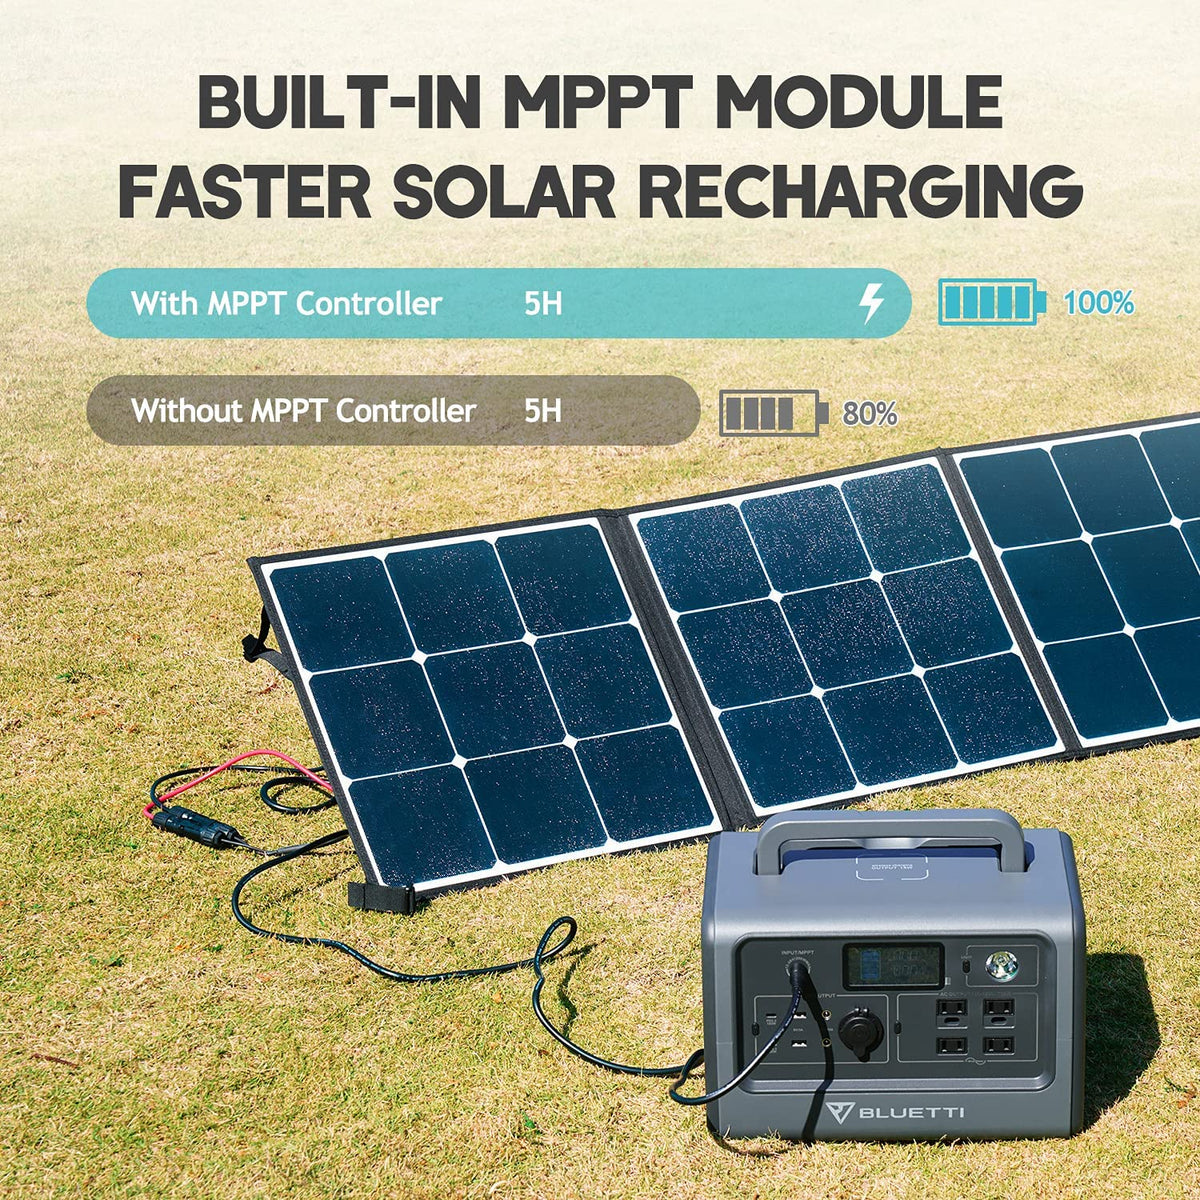 Build-in MPPT module faster solar recharging.